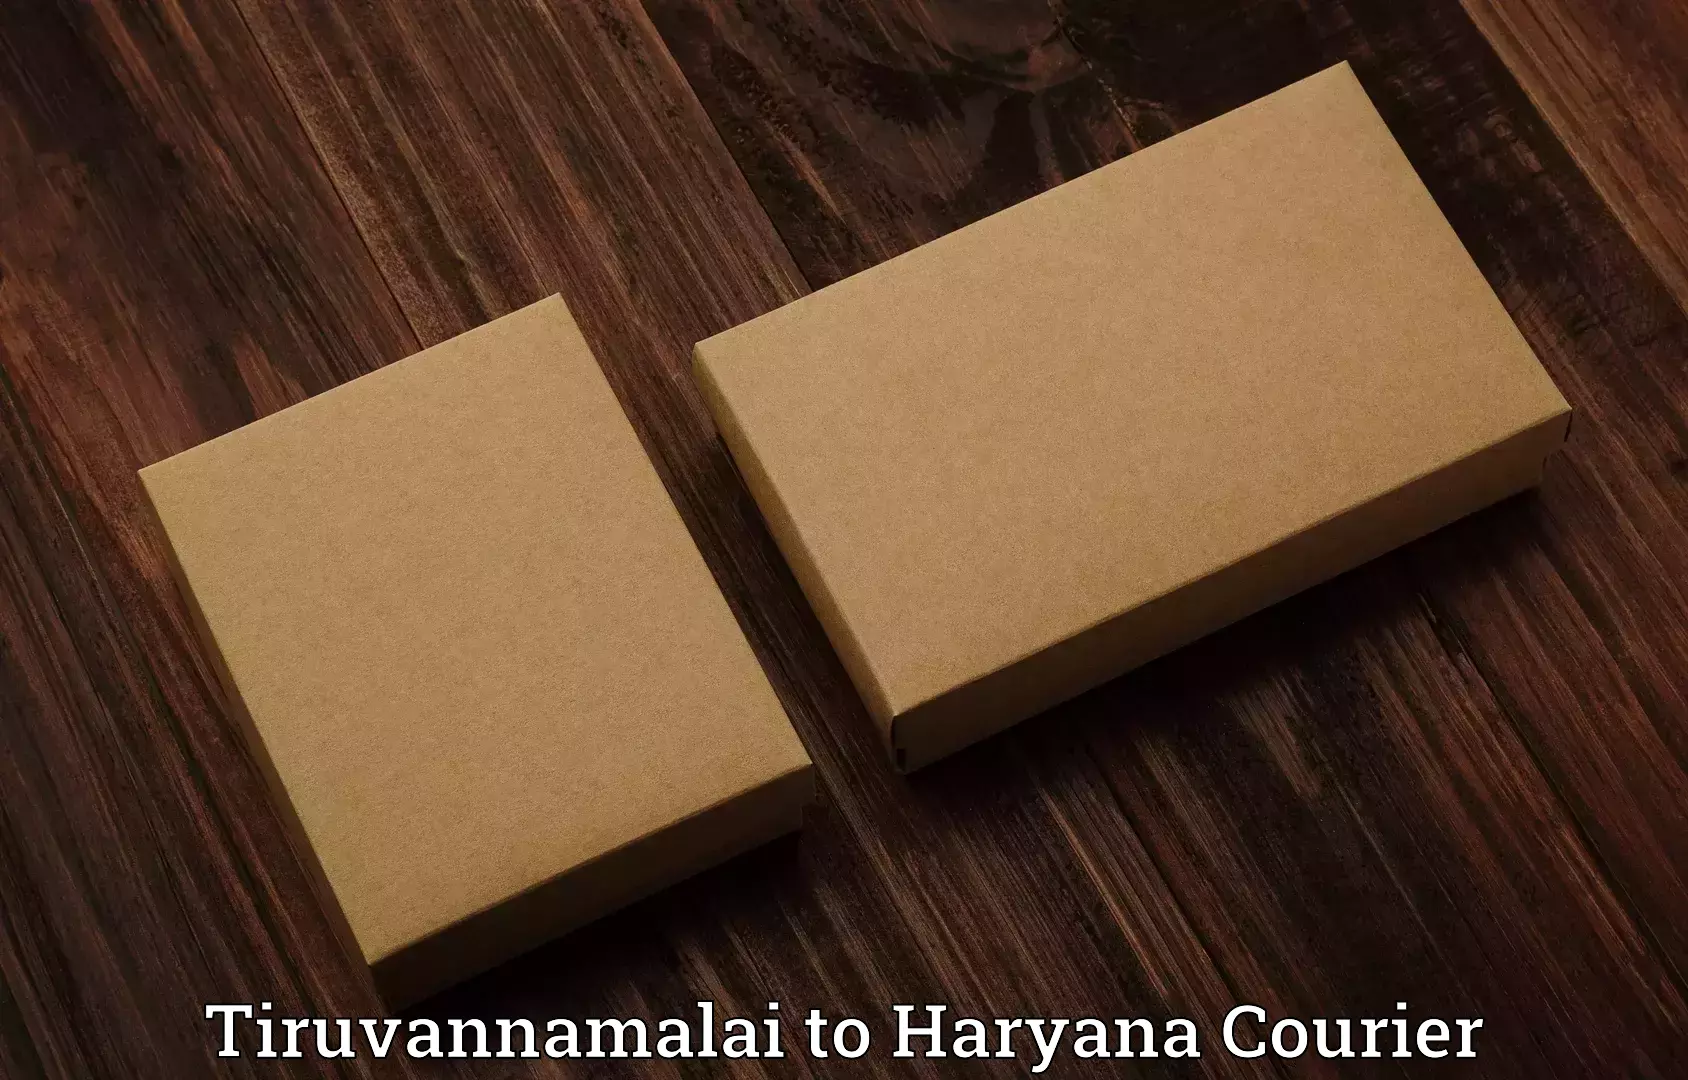 Same day luggage service Tiruvannamalai to Haryana